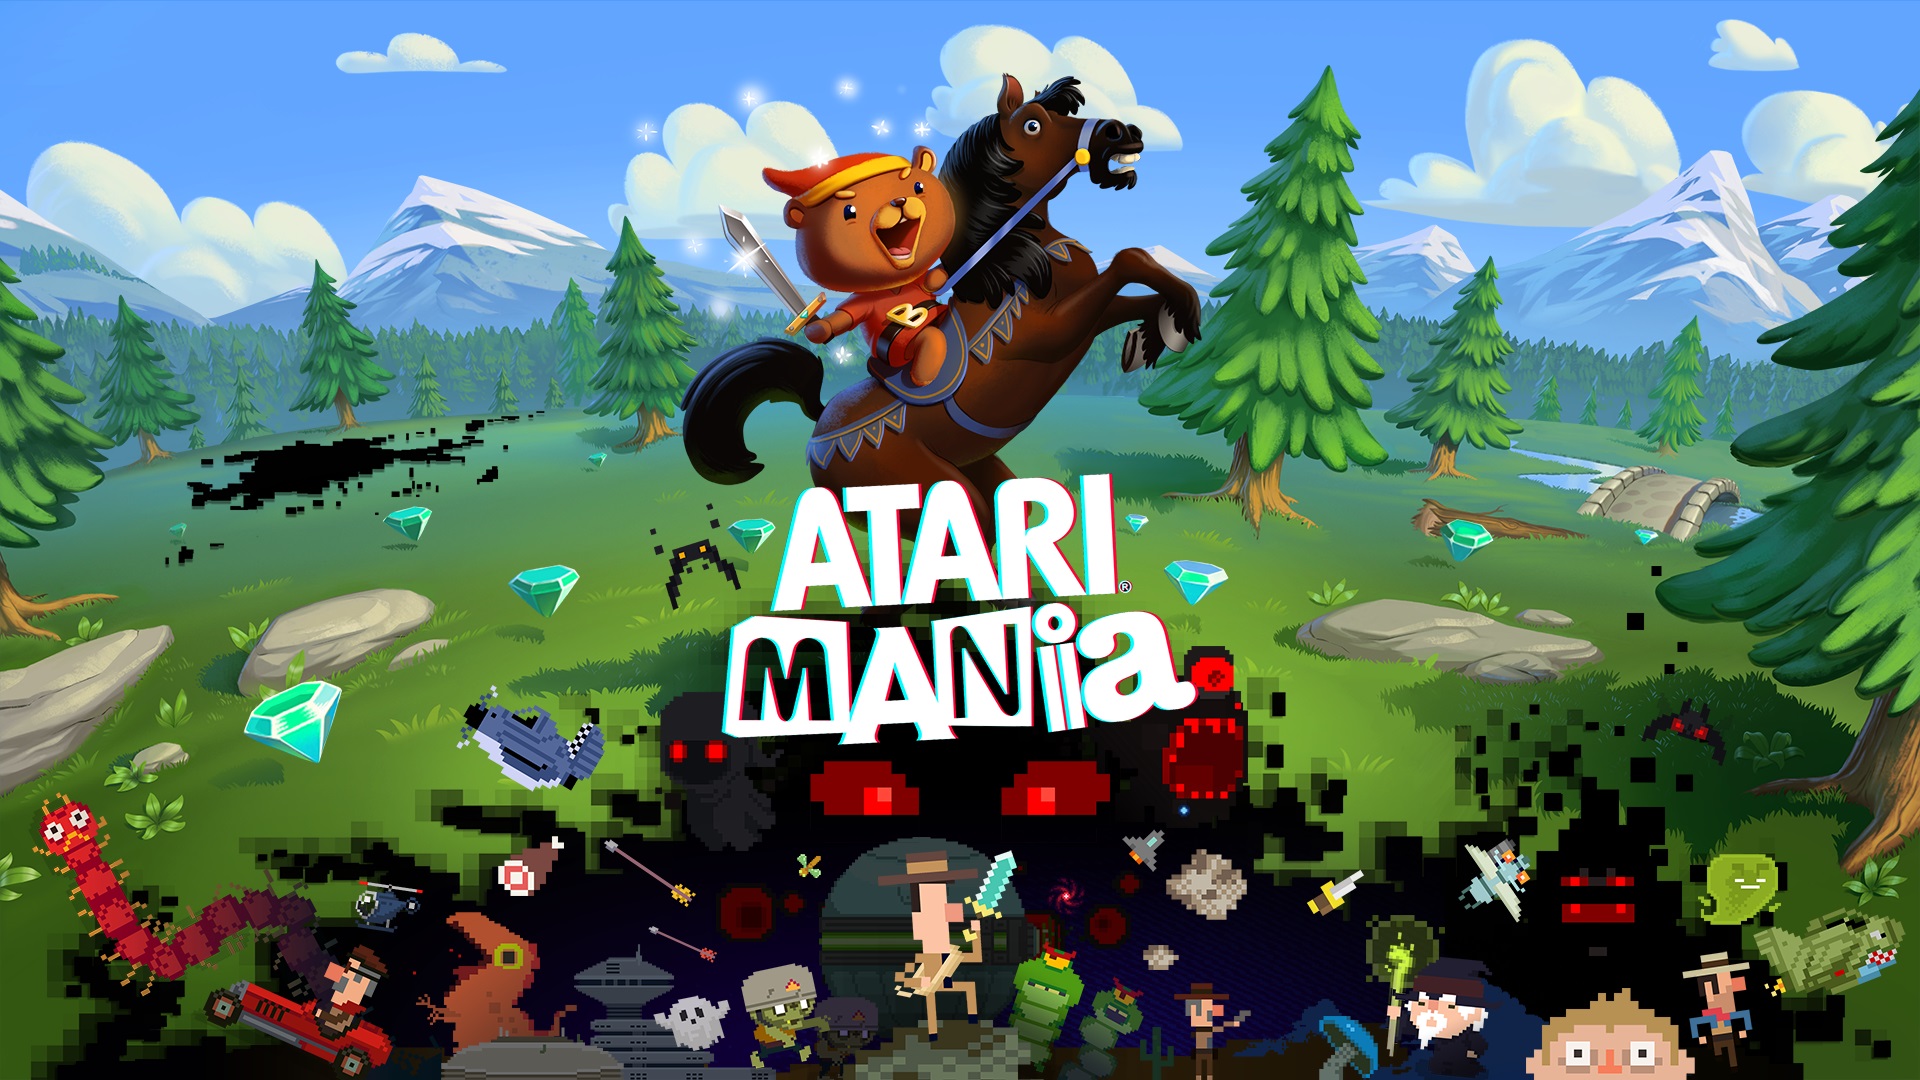 Atari Mania is getting PlayStation ports in April